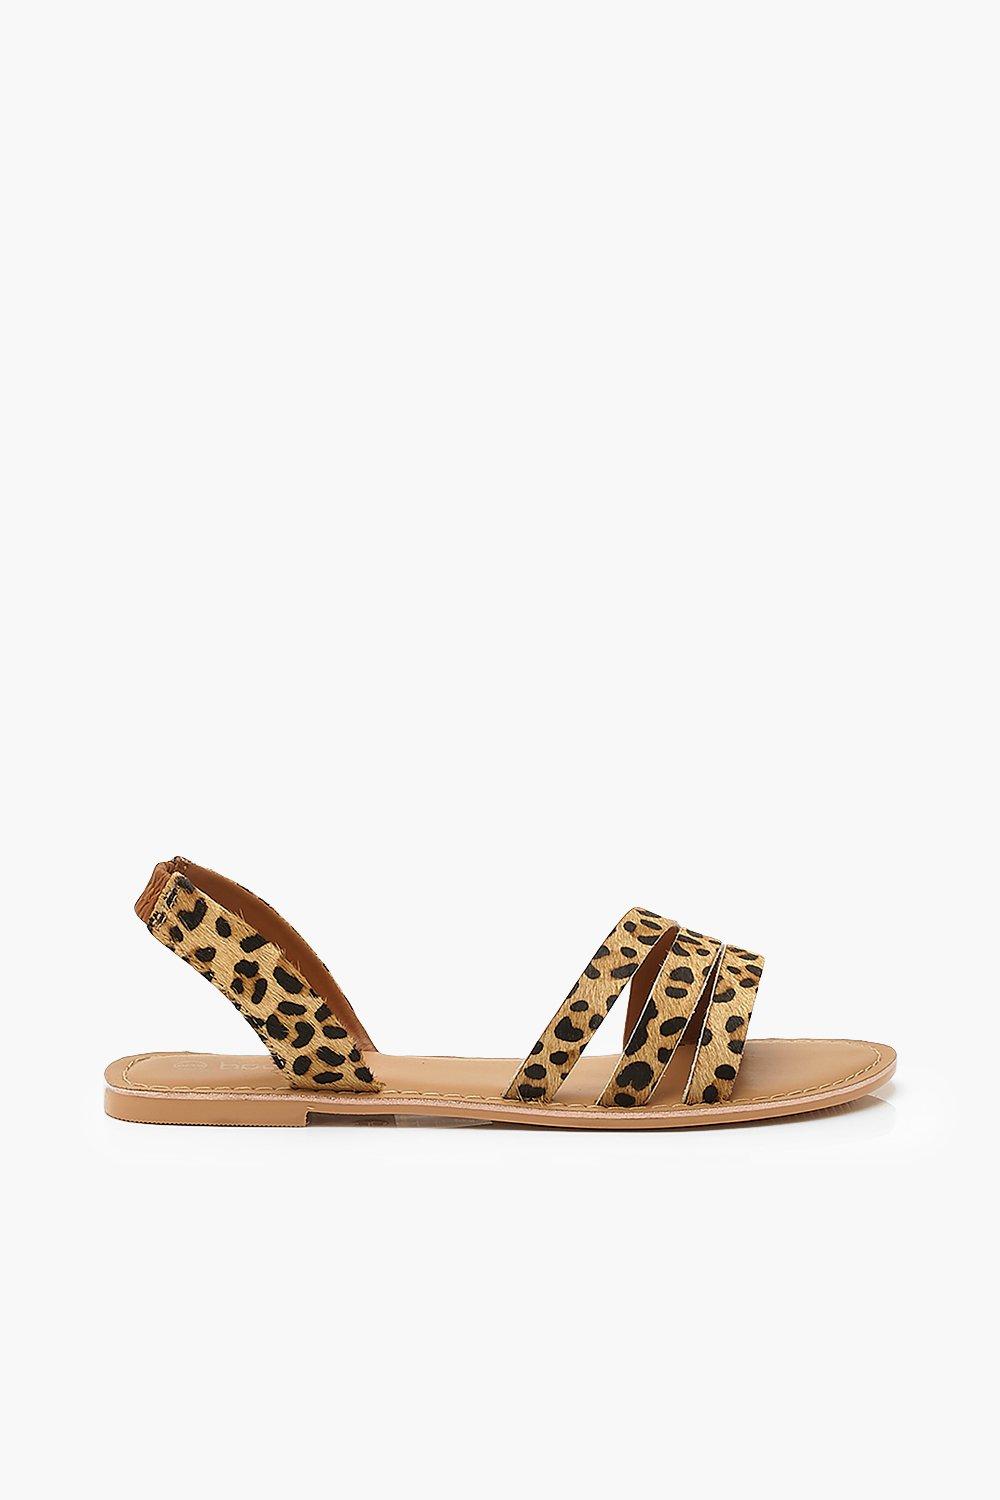 wide width leopard sandals